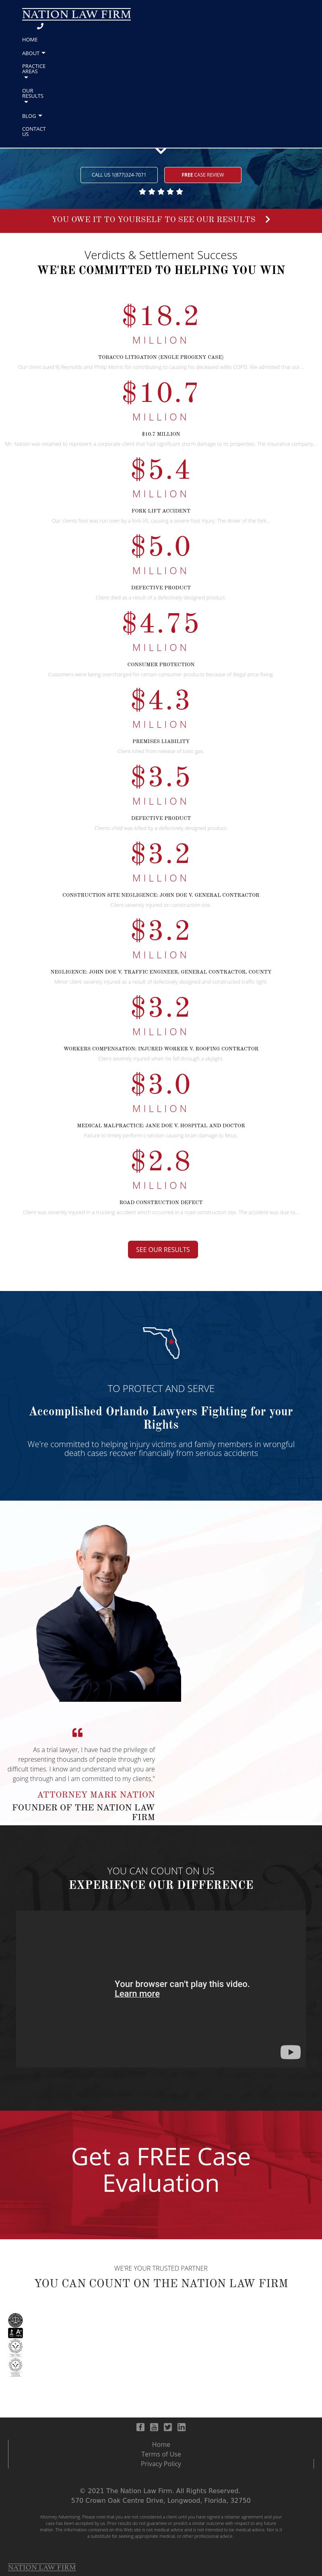 Nation Law Firm - Rockledge FL Lawyers